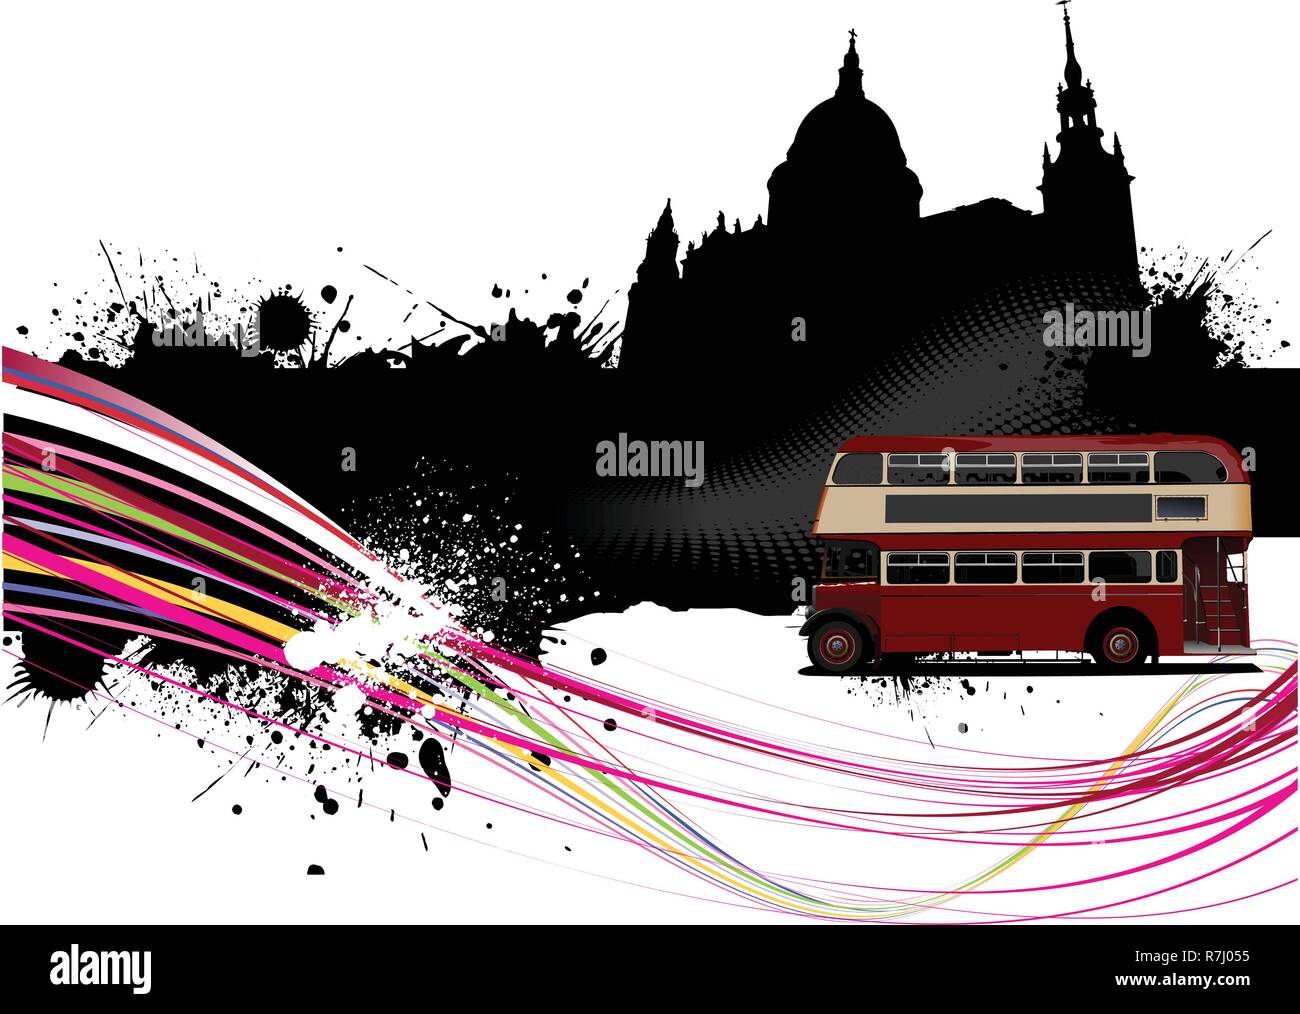 Grunge-London-Bilder mit Bussen Bild. Vektor-illustration Stock Vektor